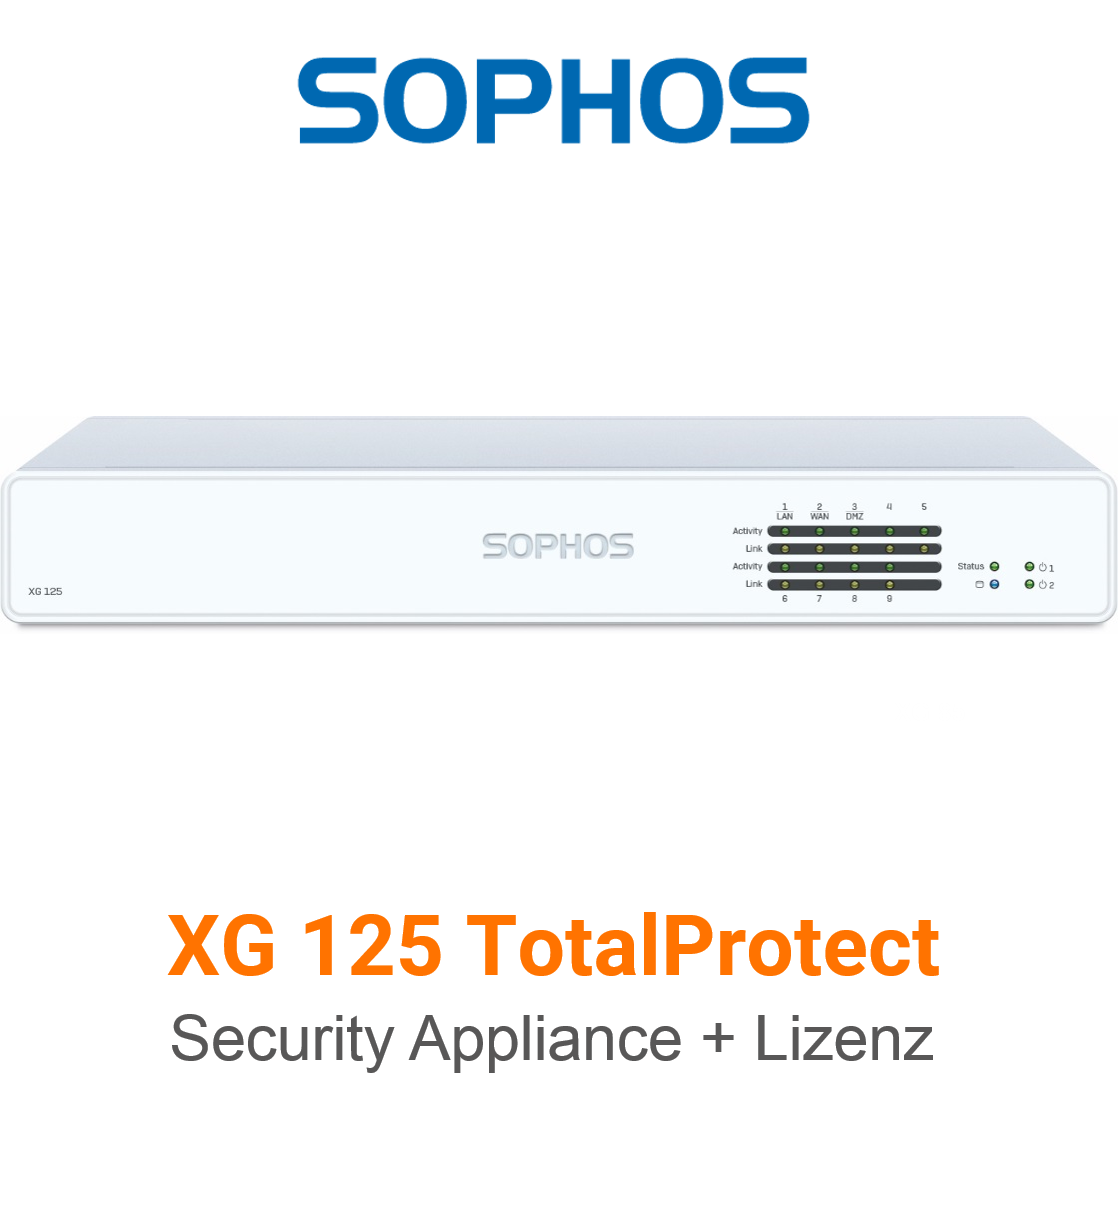 Sophos XG 125 TotalProtect Bundle (Hardware + Lizenz)